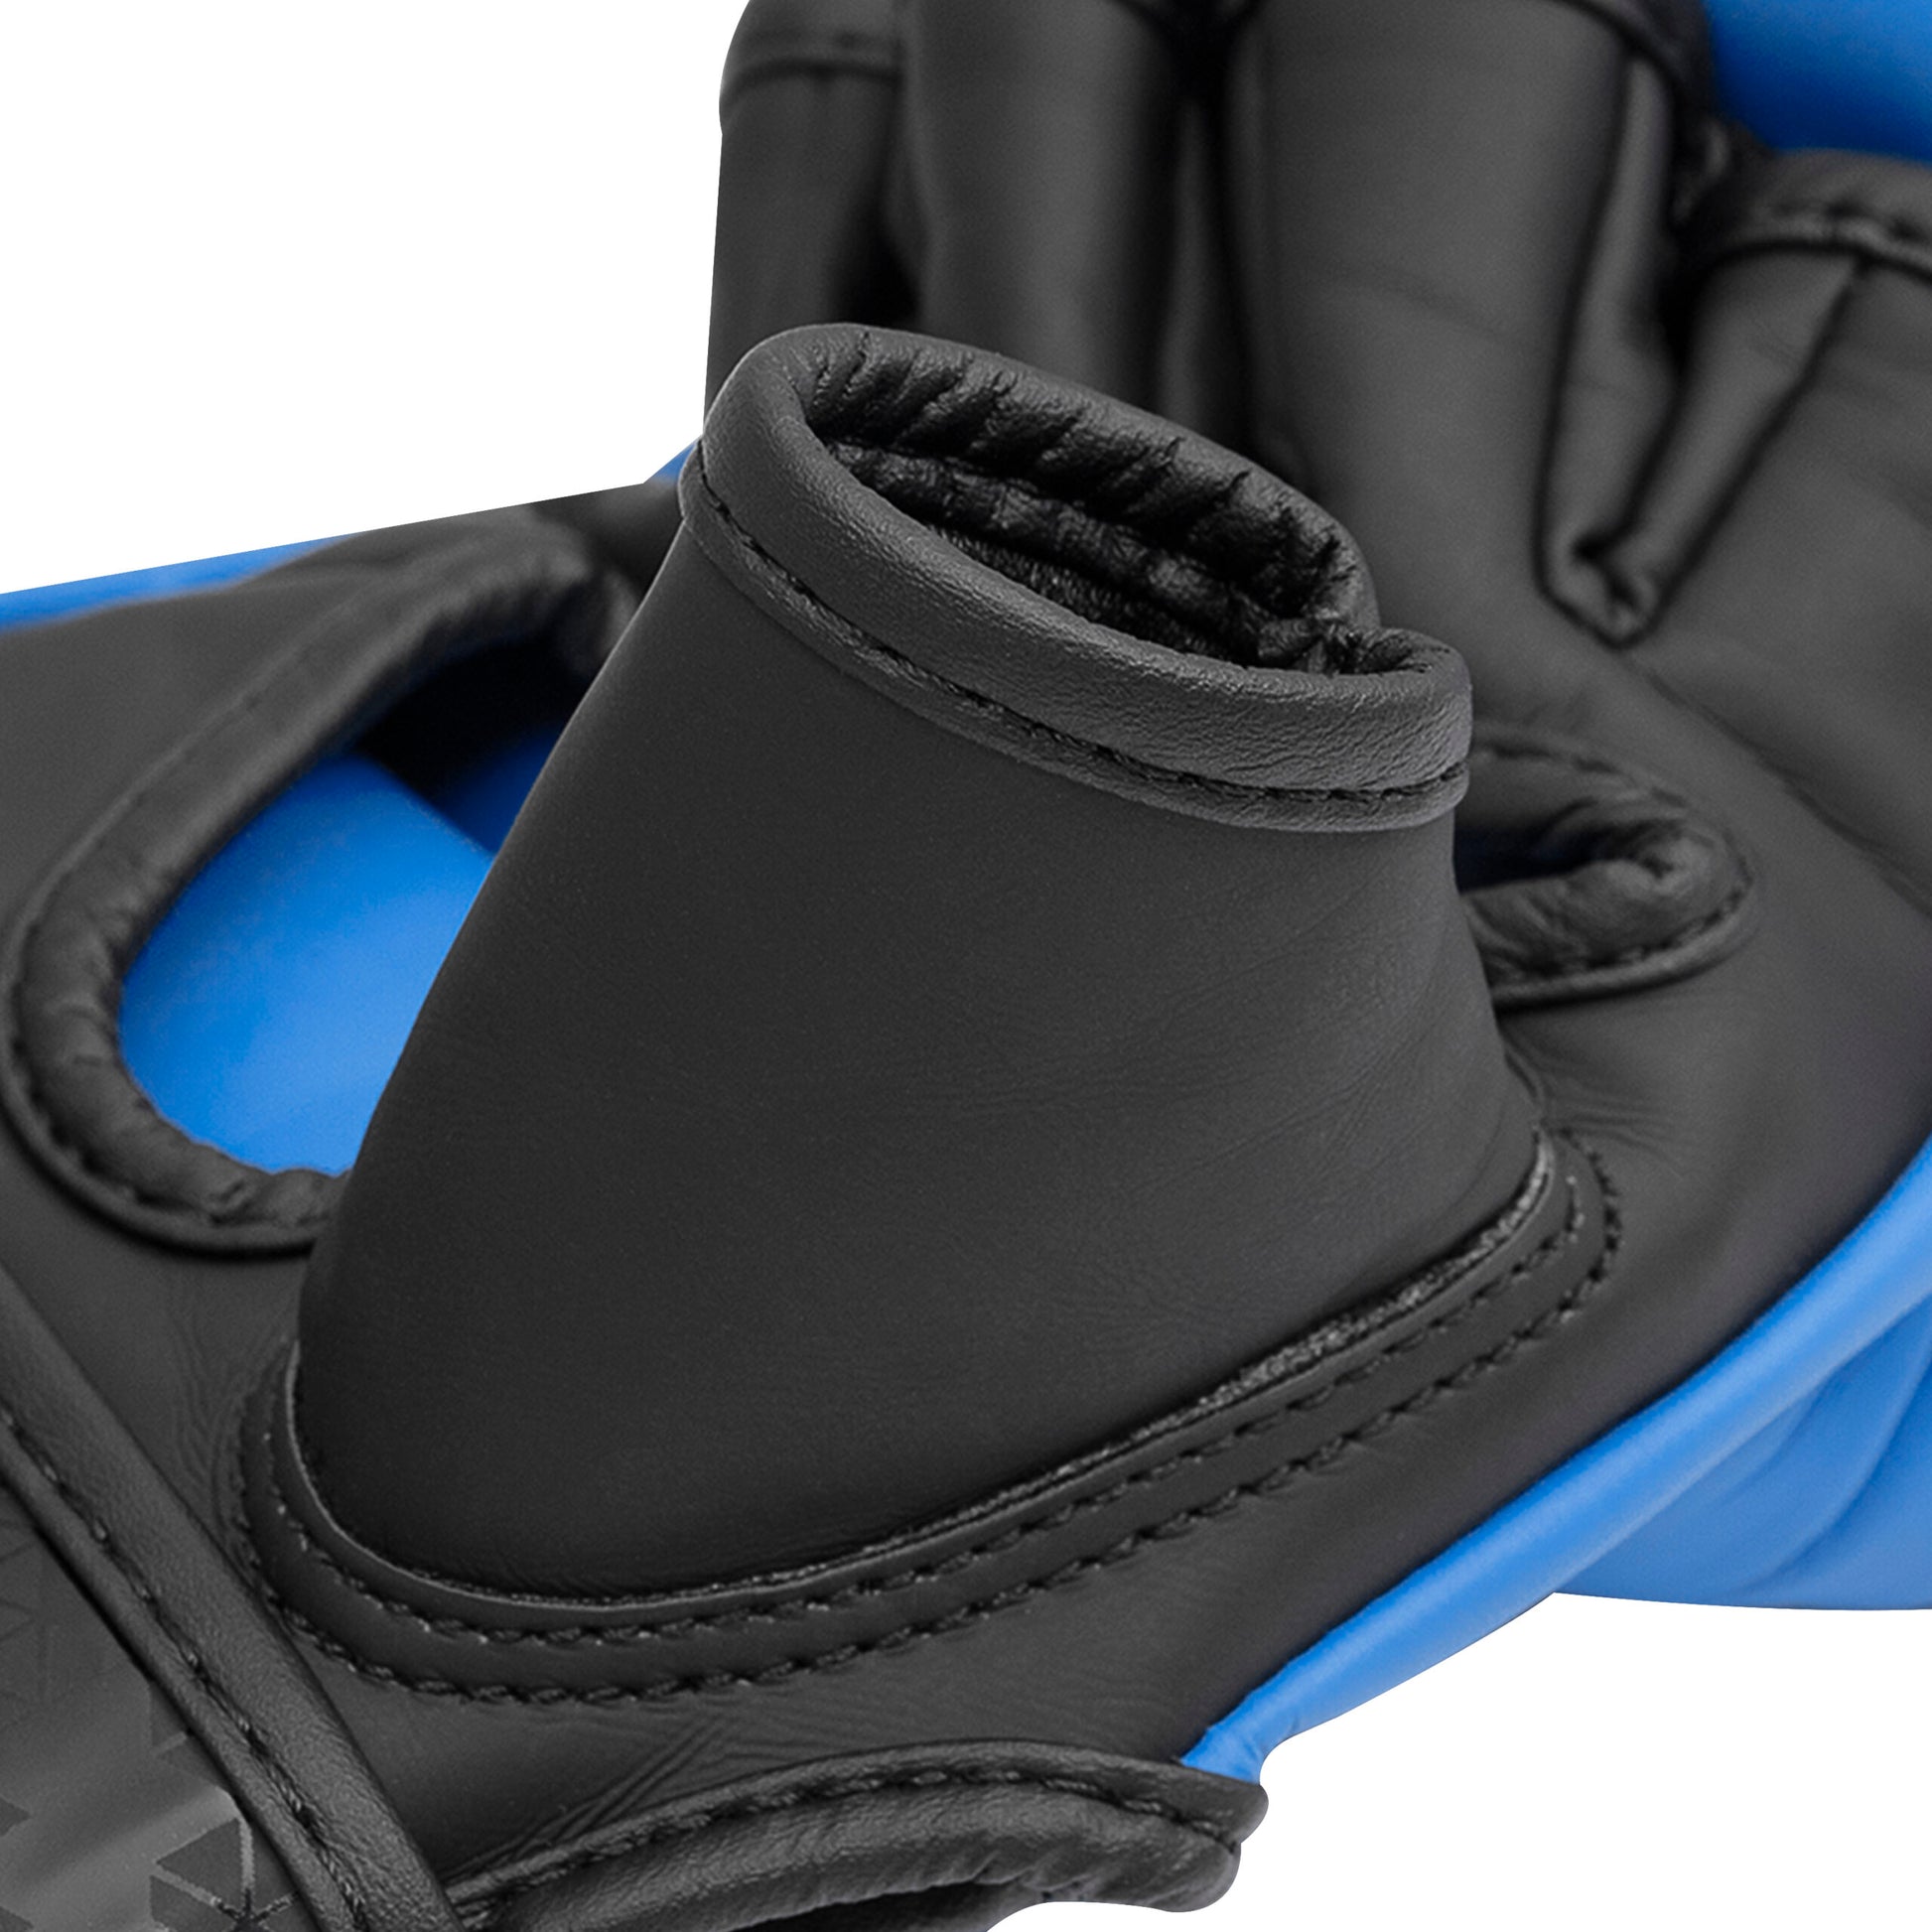 Adic50gg Adidas Combat 50 Grappling Glove Blue Black 06